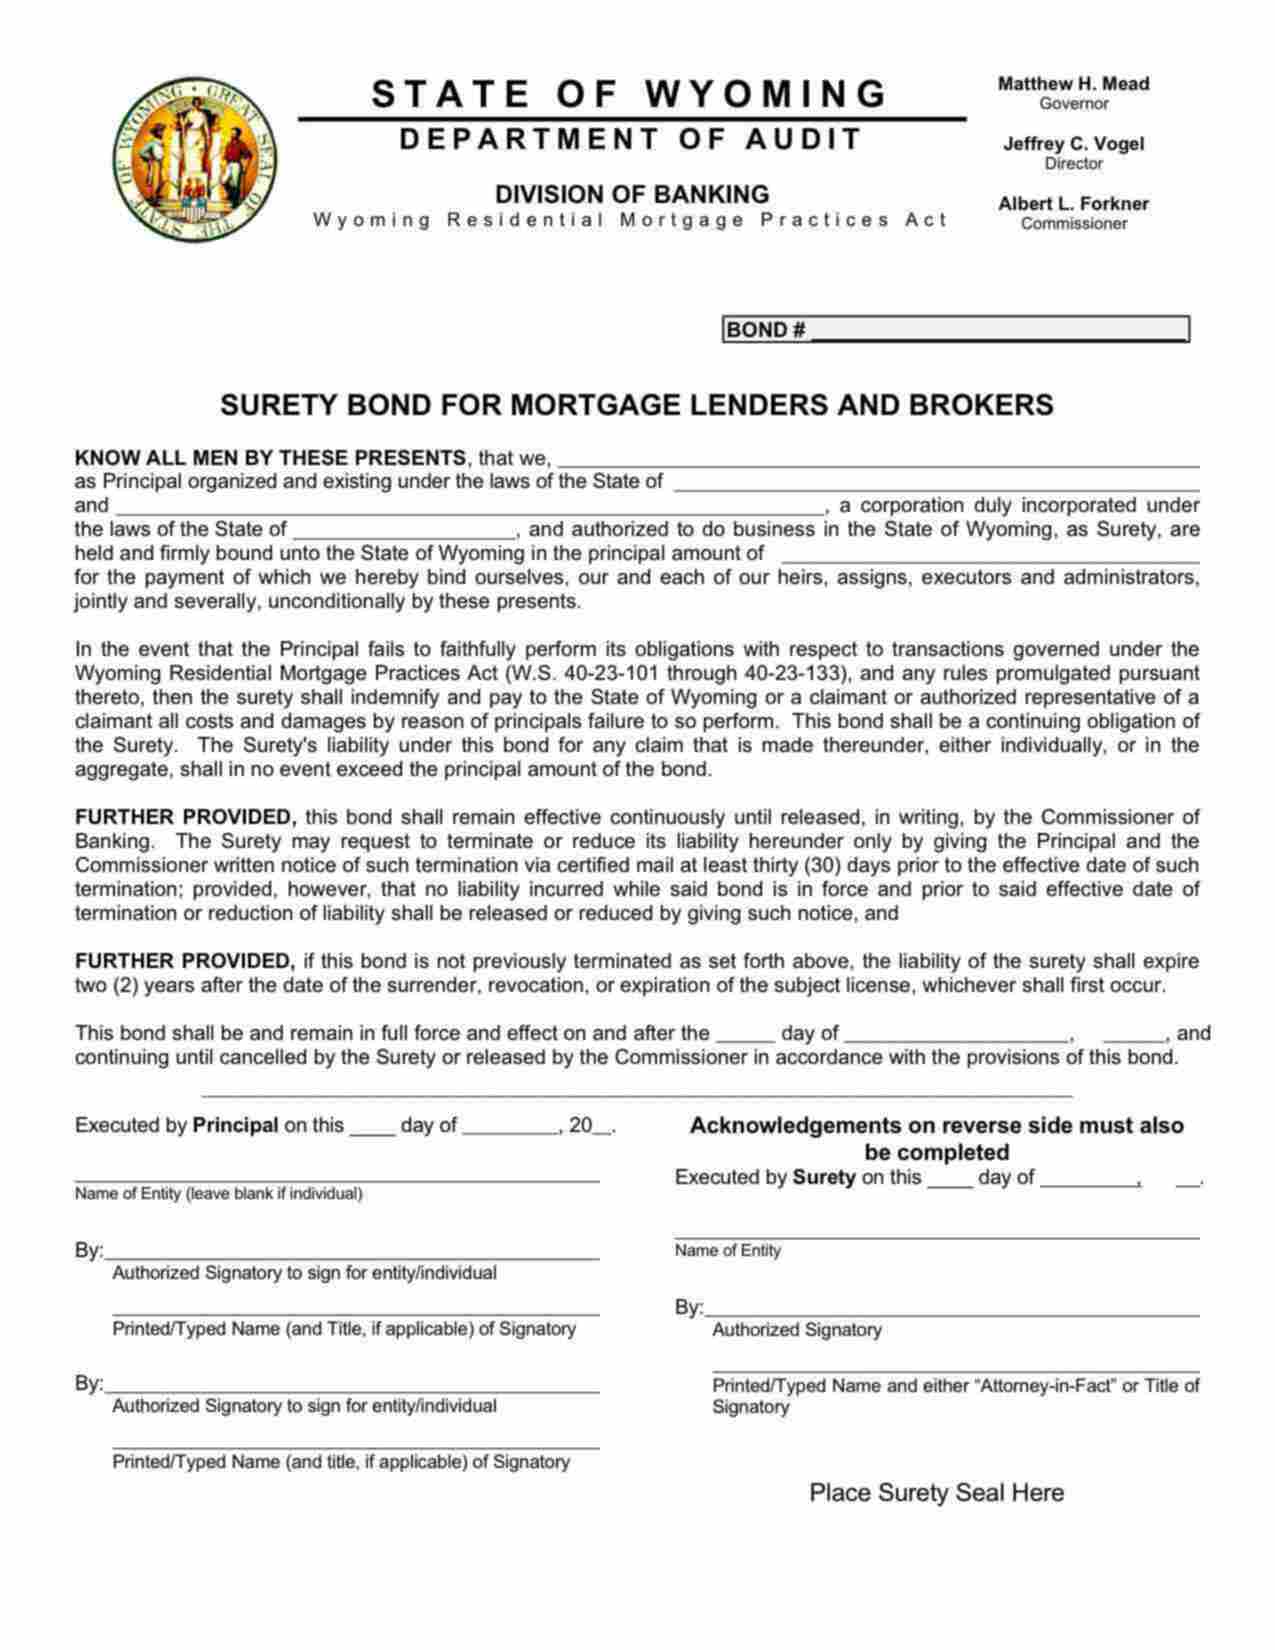 Wyoming Mortgage Lender/Broker License Bond Form